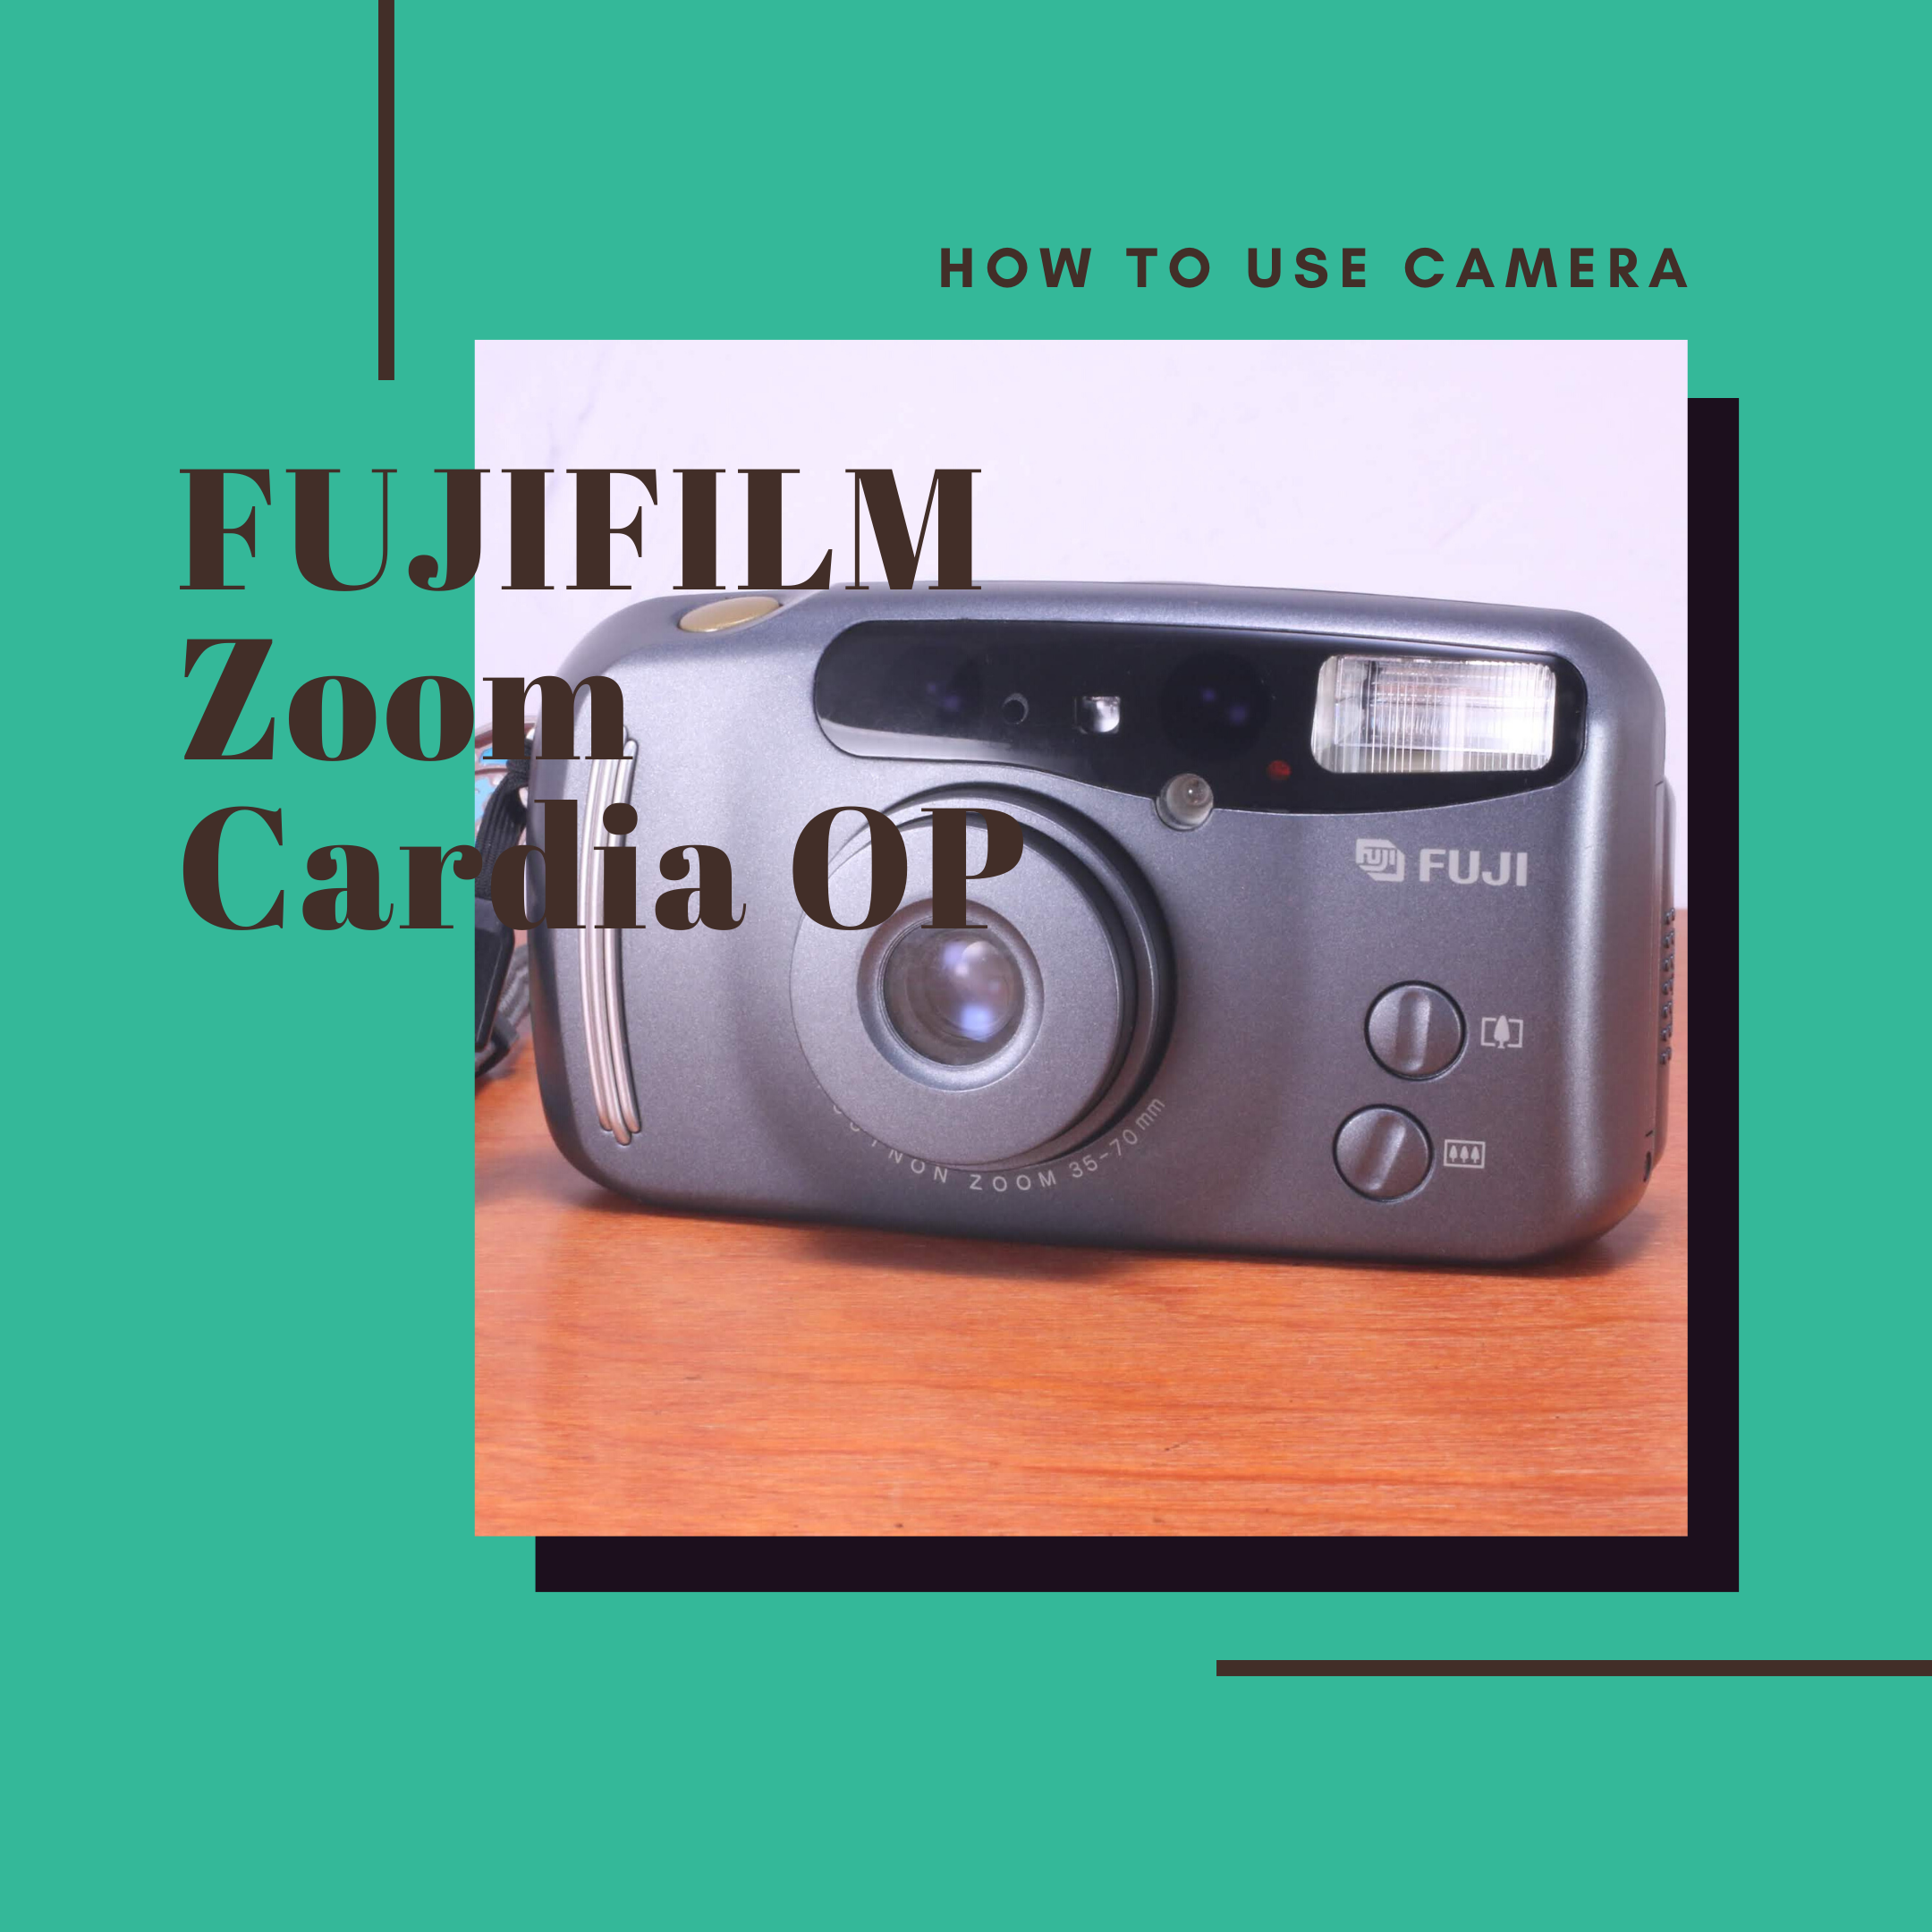 FUJIFILM ZOOM CARDIA OP の使い方 | Totte Me Camera